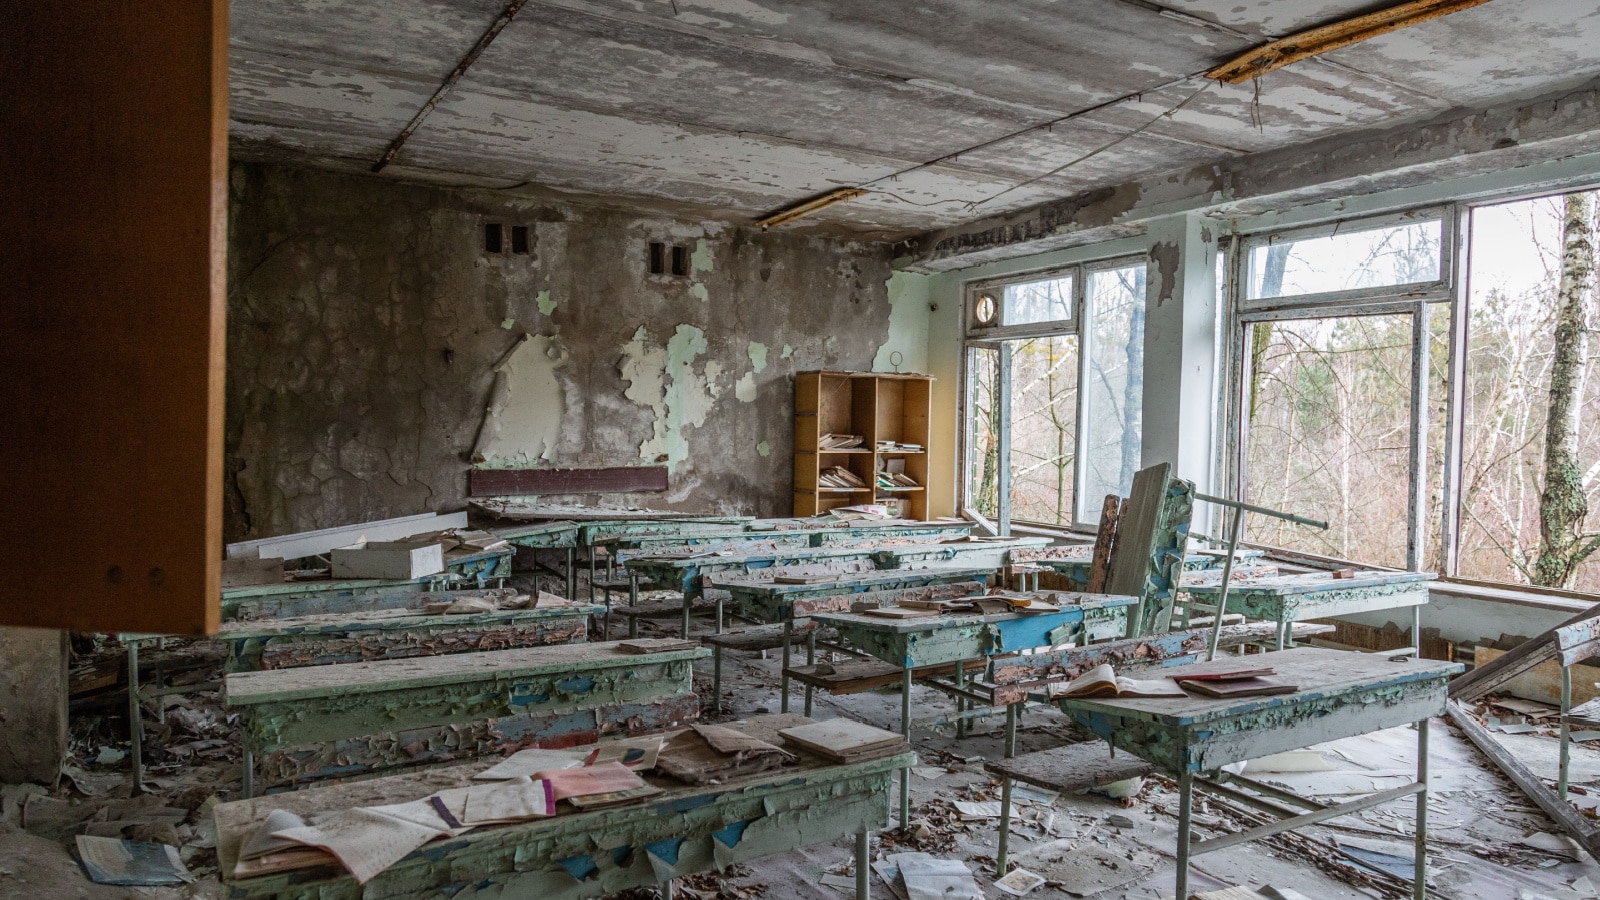 School premises in the city of Pripyat in Ukraine. Emptiness. Dampness. Exclusion Zone. Chernobyl zone